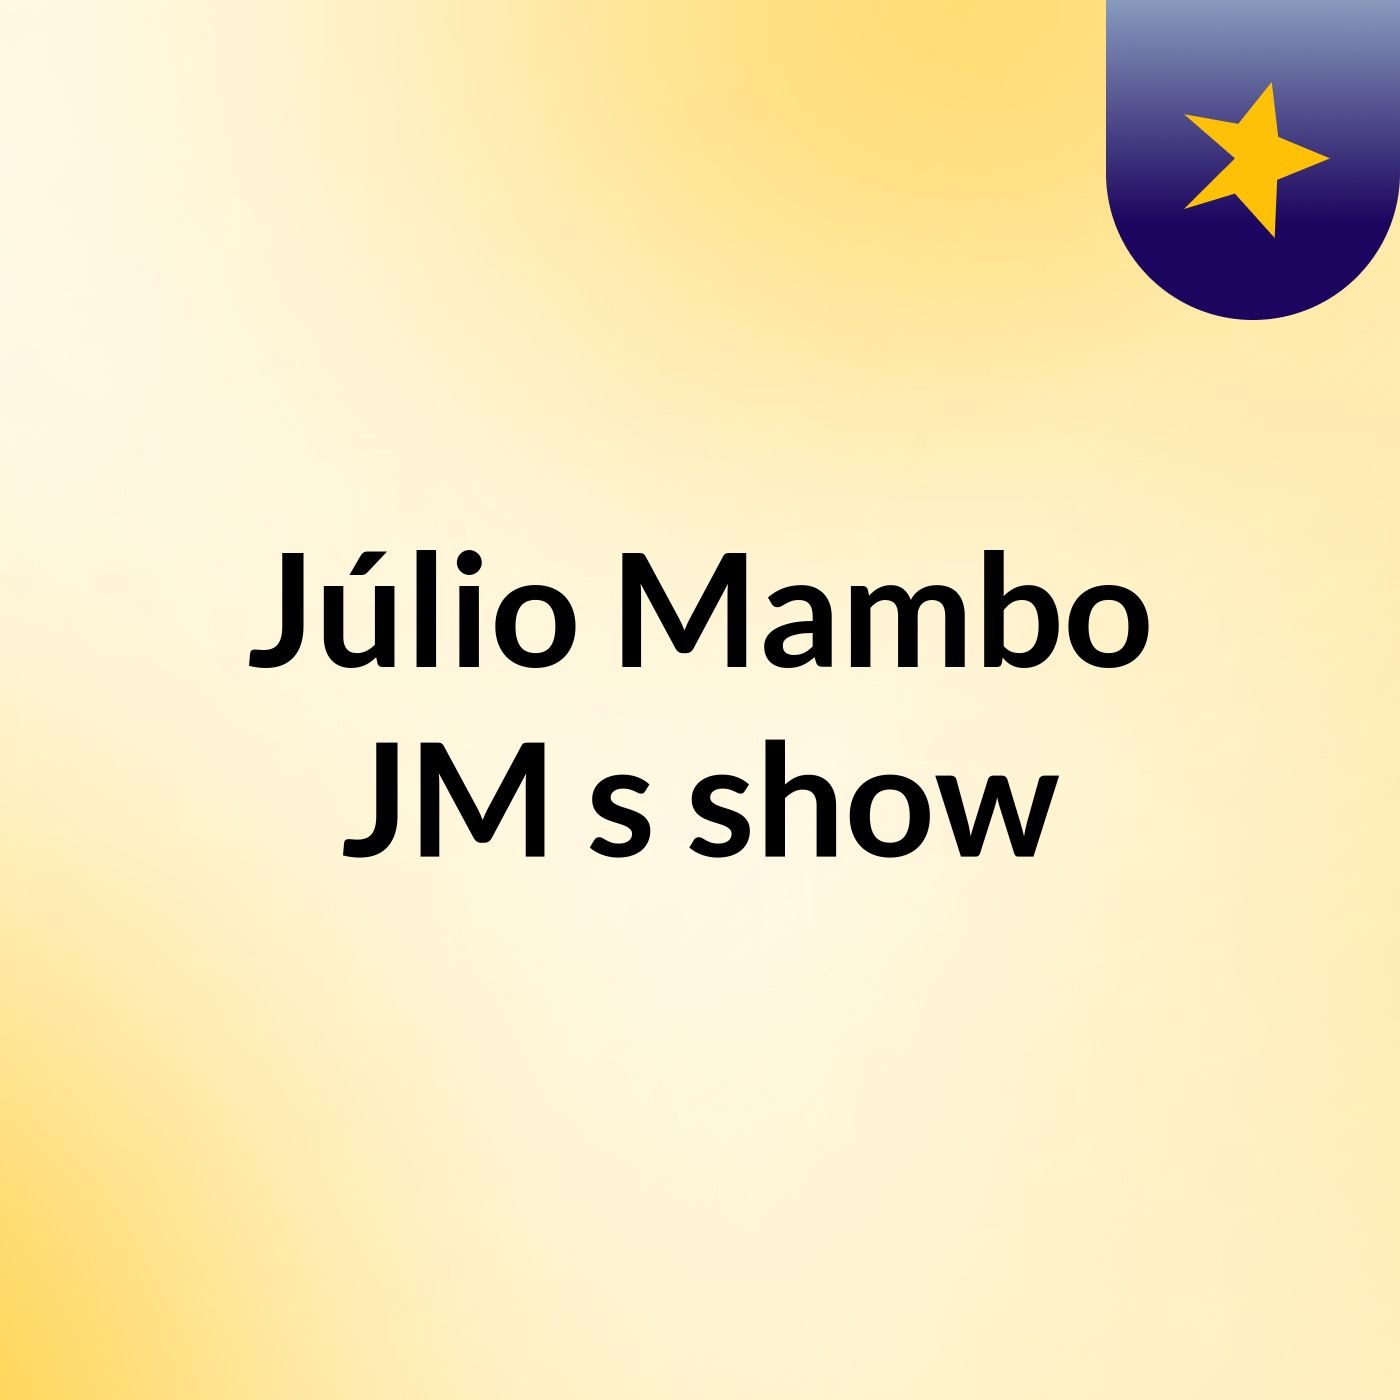 Júlio Mambo JM's show